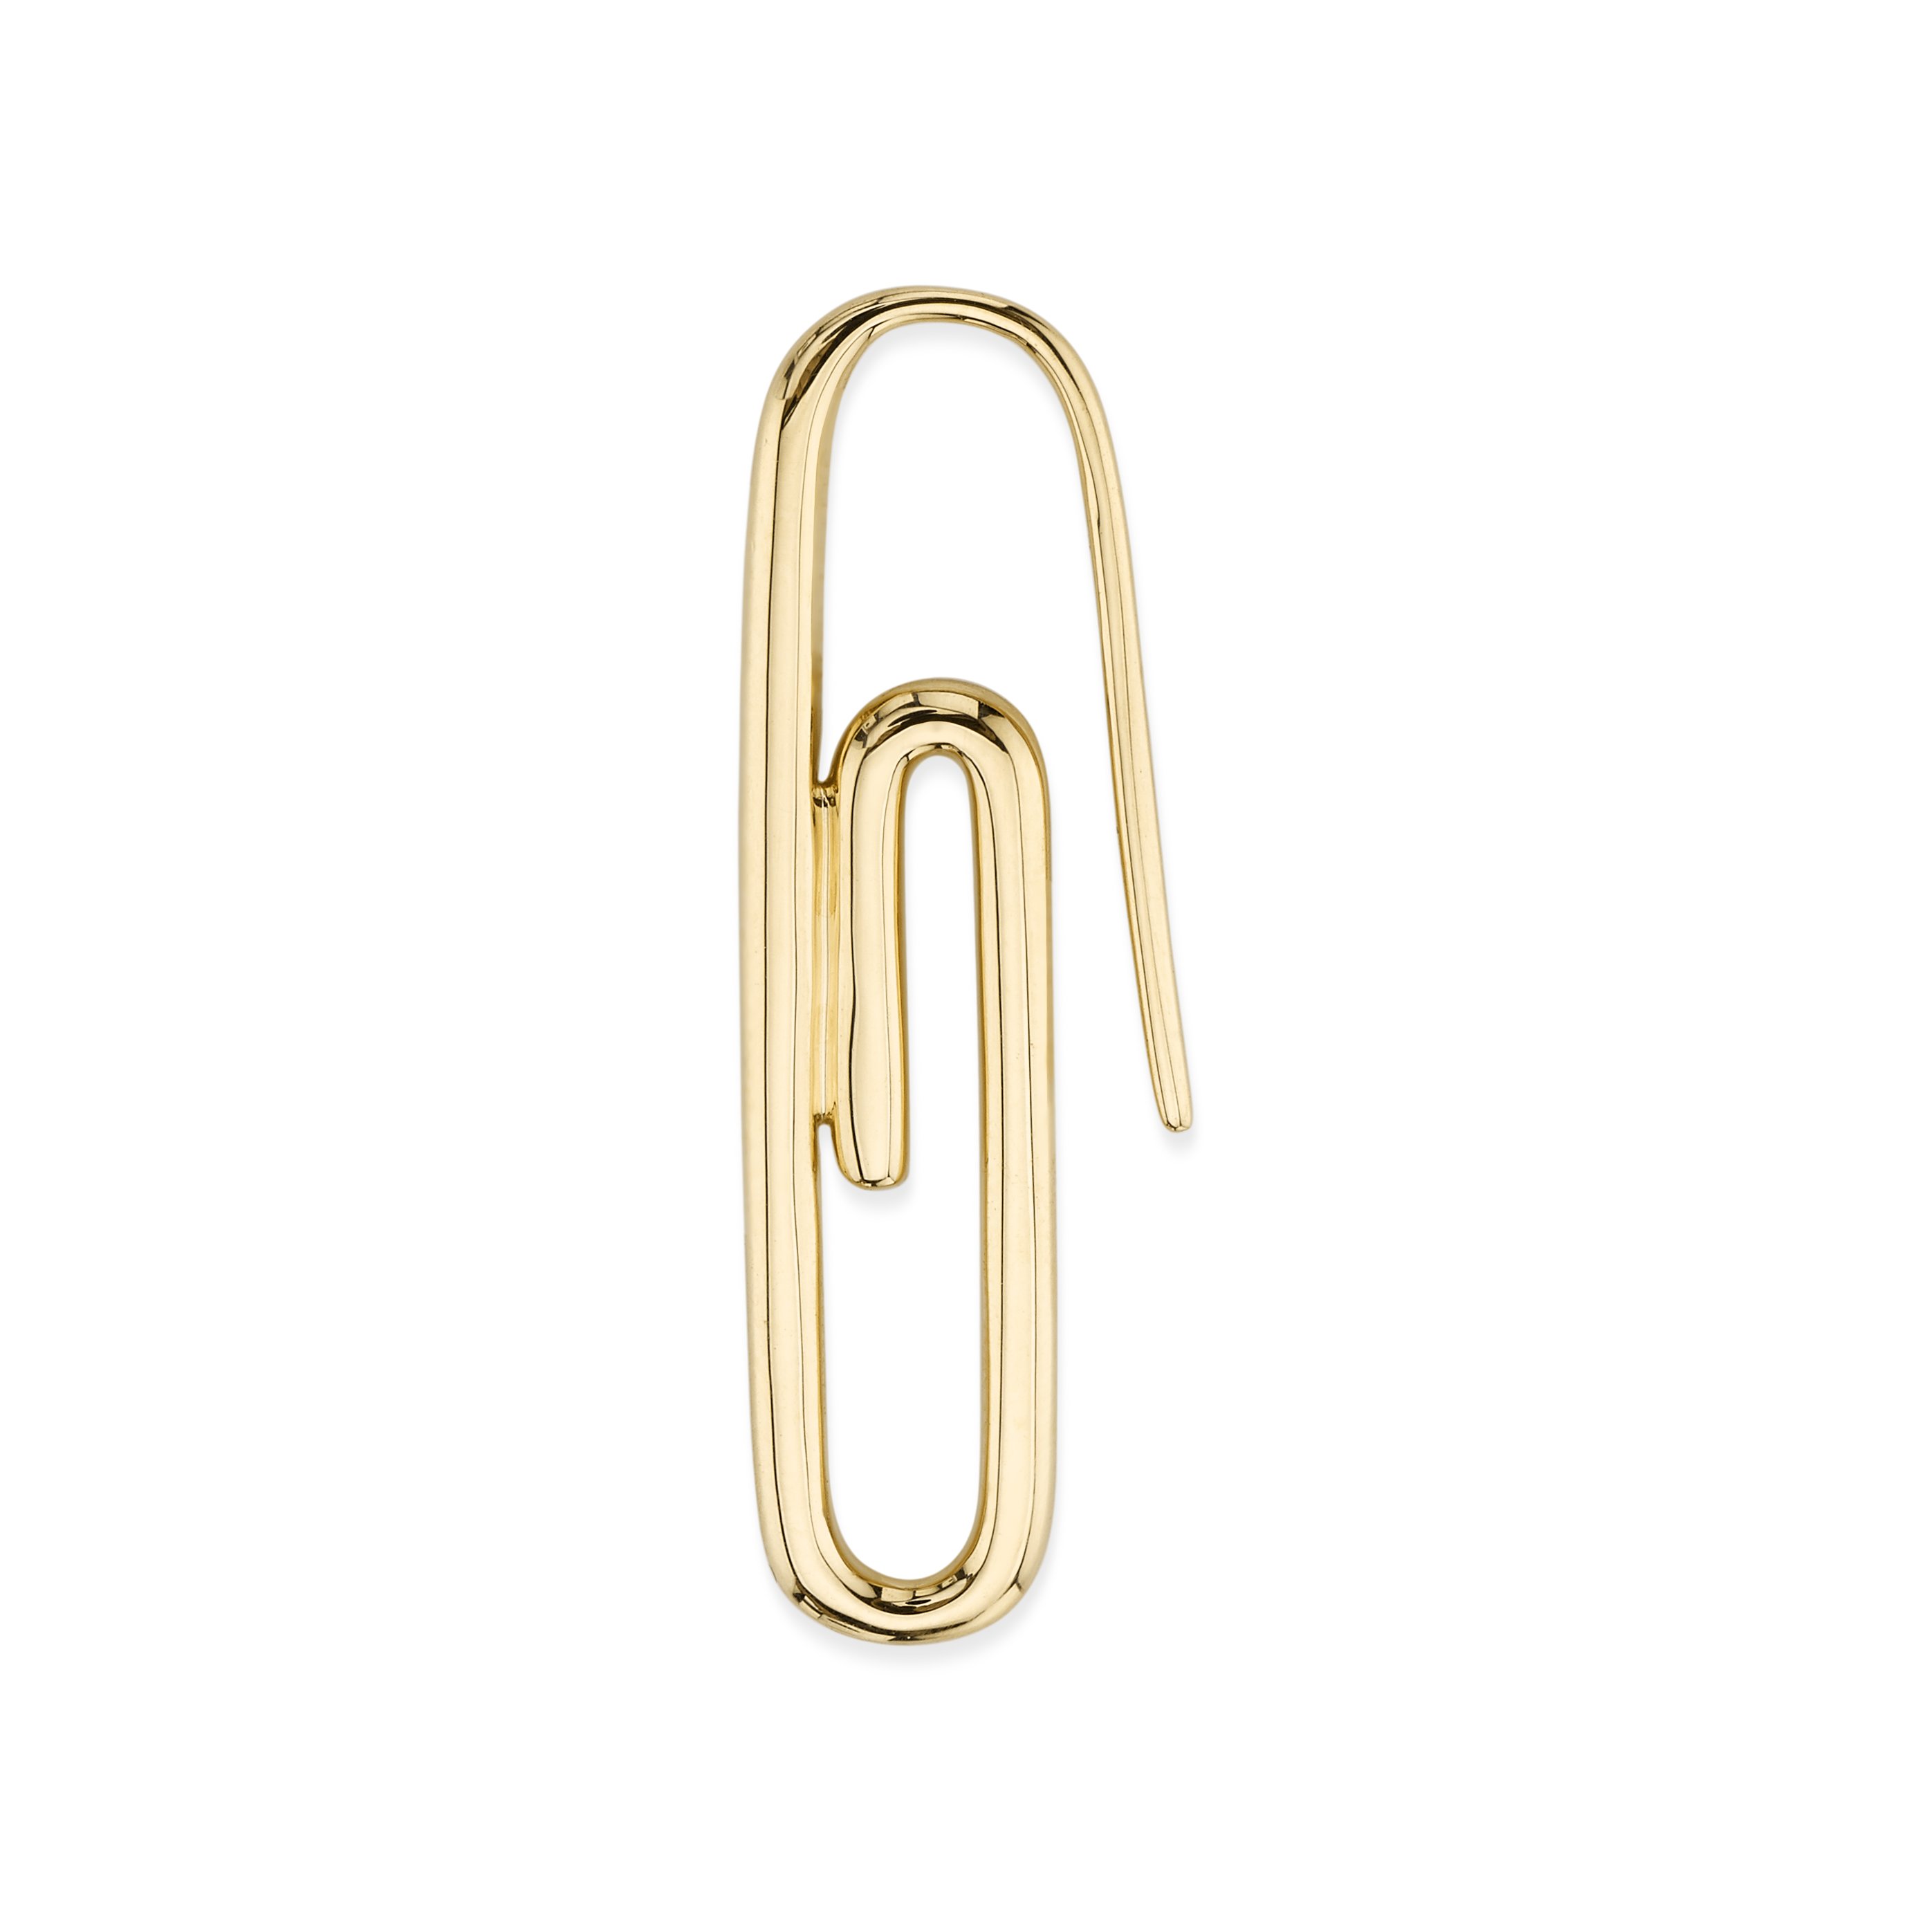 Paper clip earring - Anita Ko